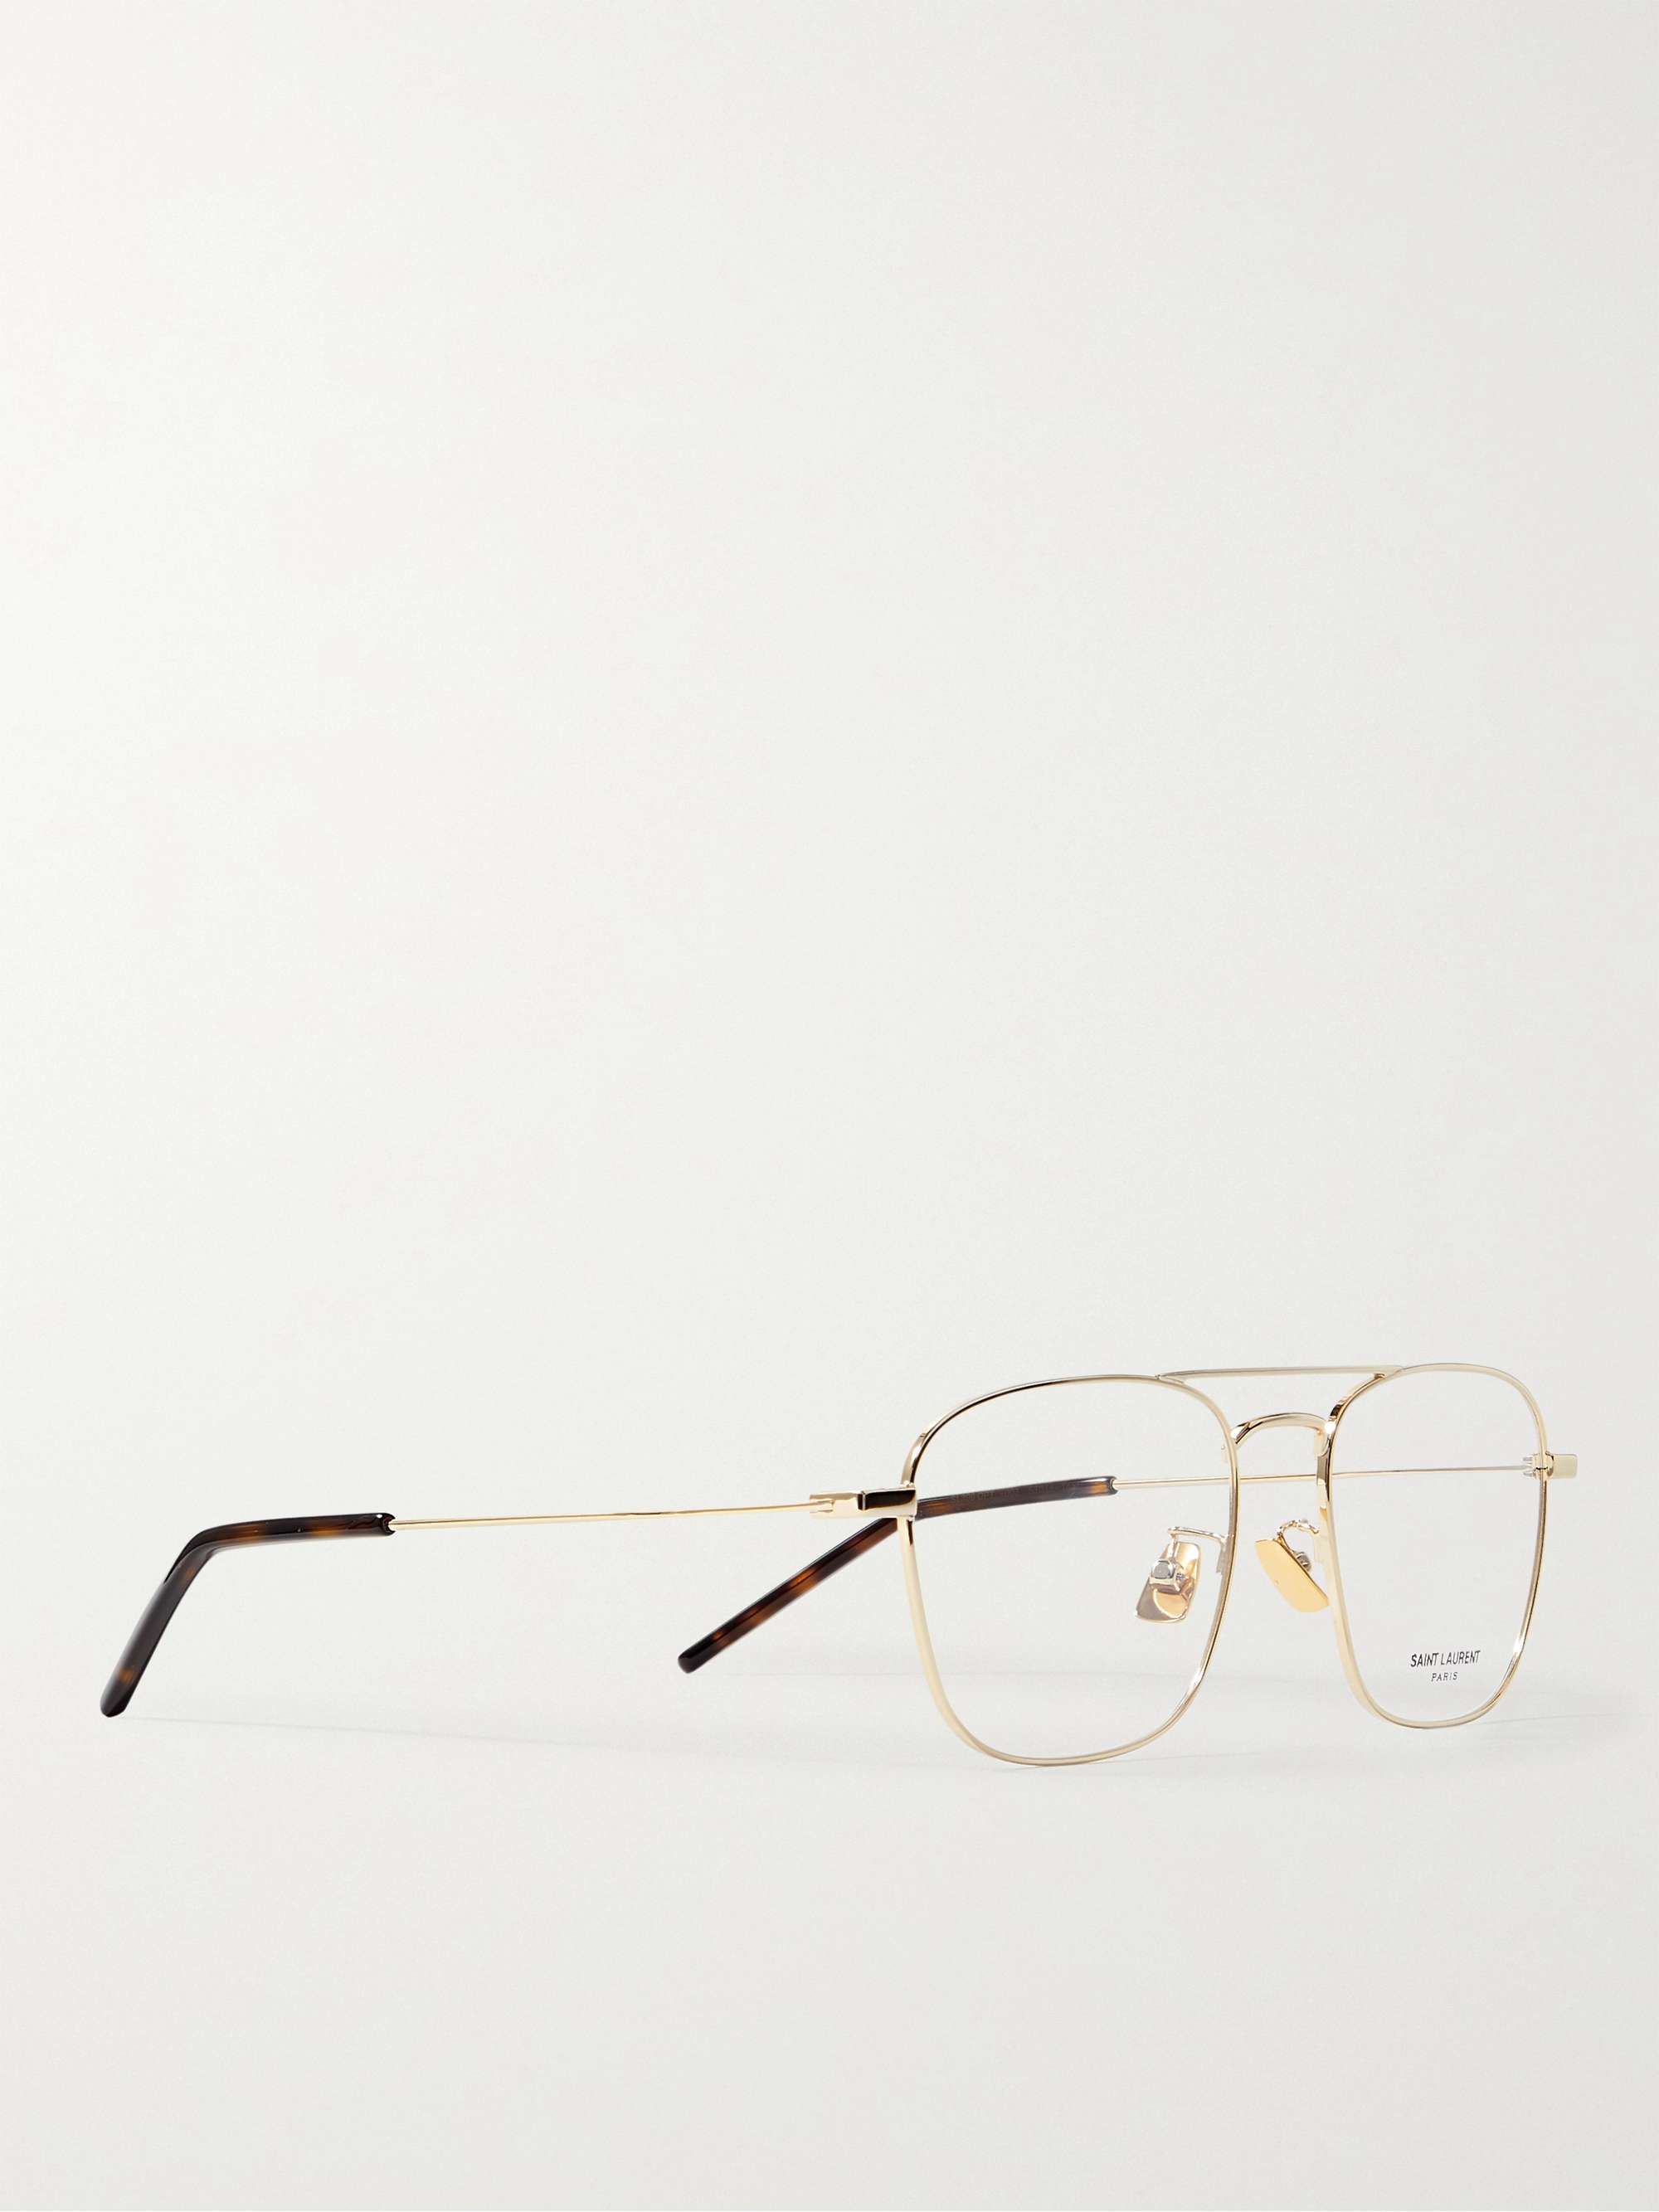 SAINT LAURENT EYEWEAR Aviator-Style Gold-Tone Optical Glasses